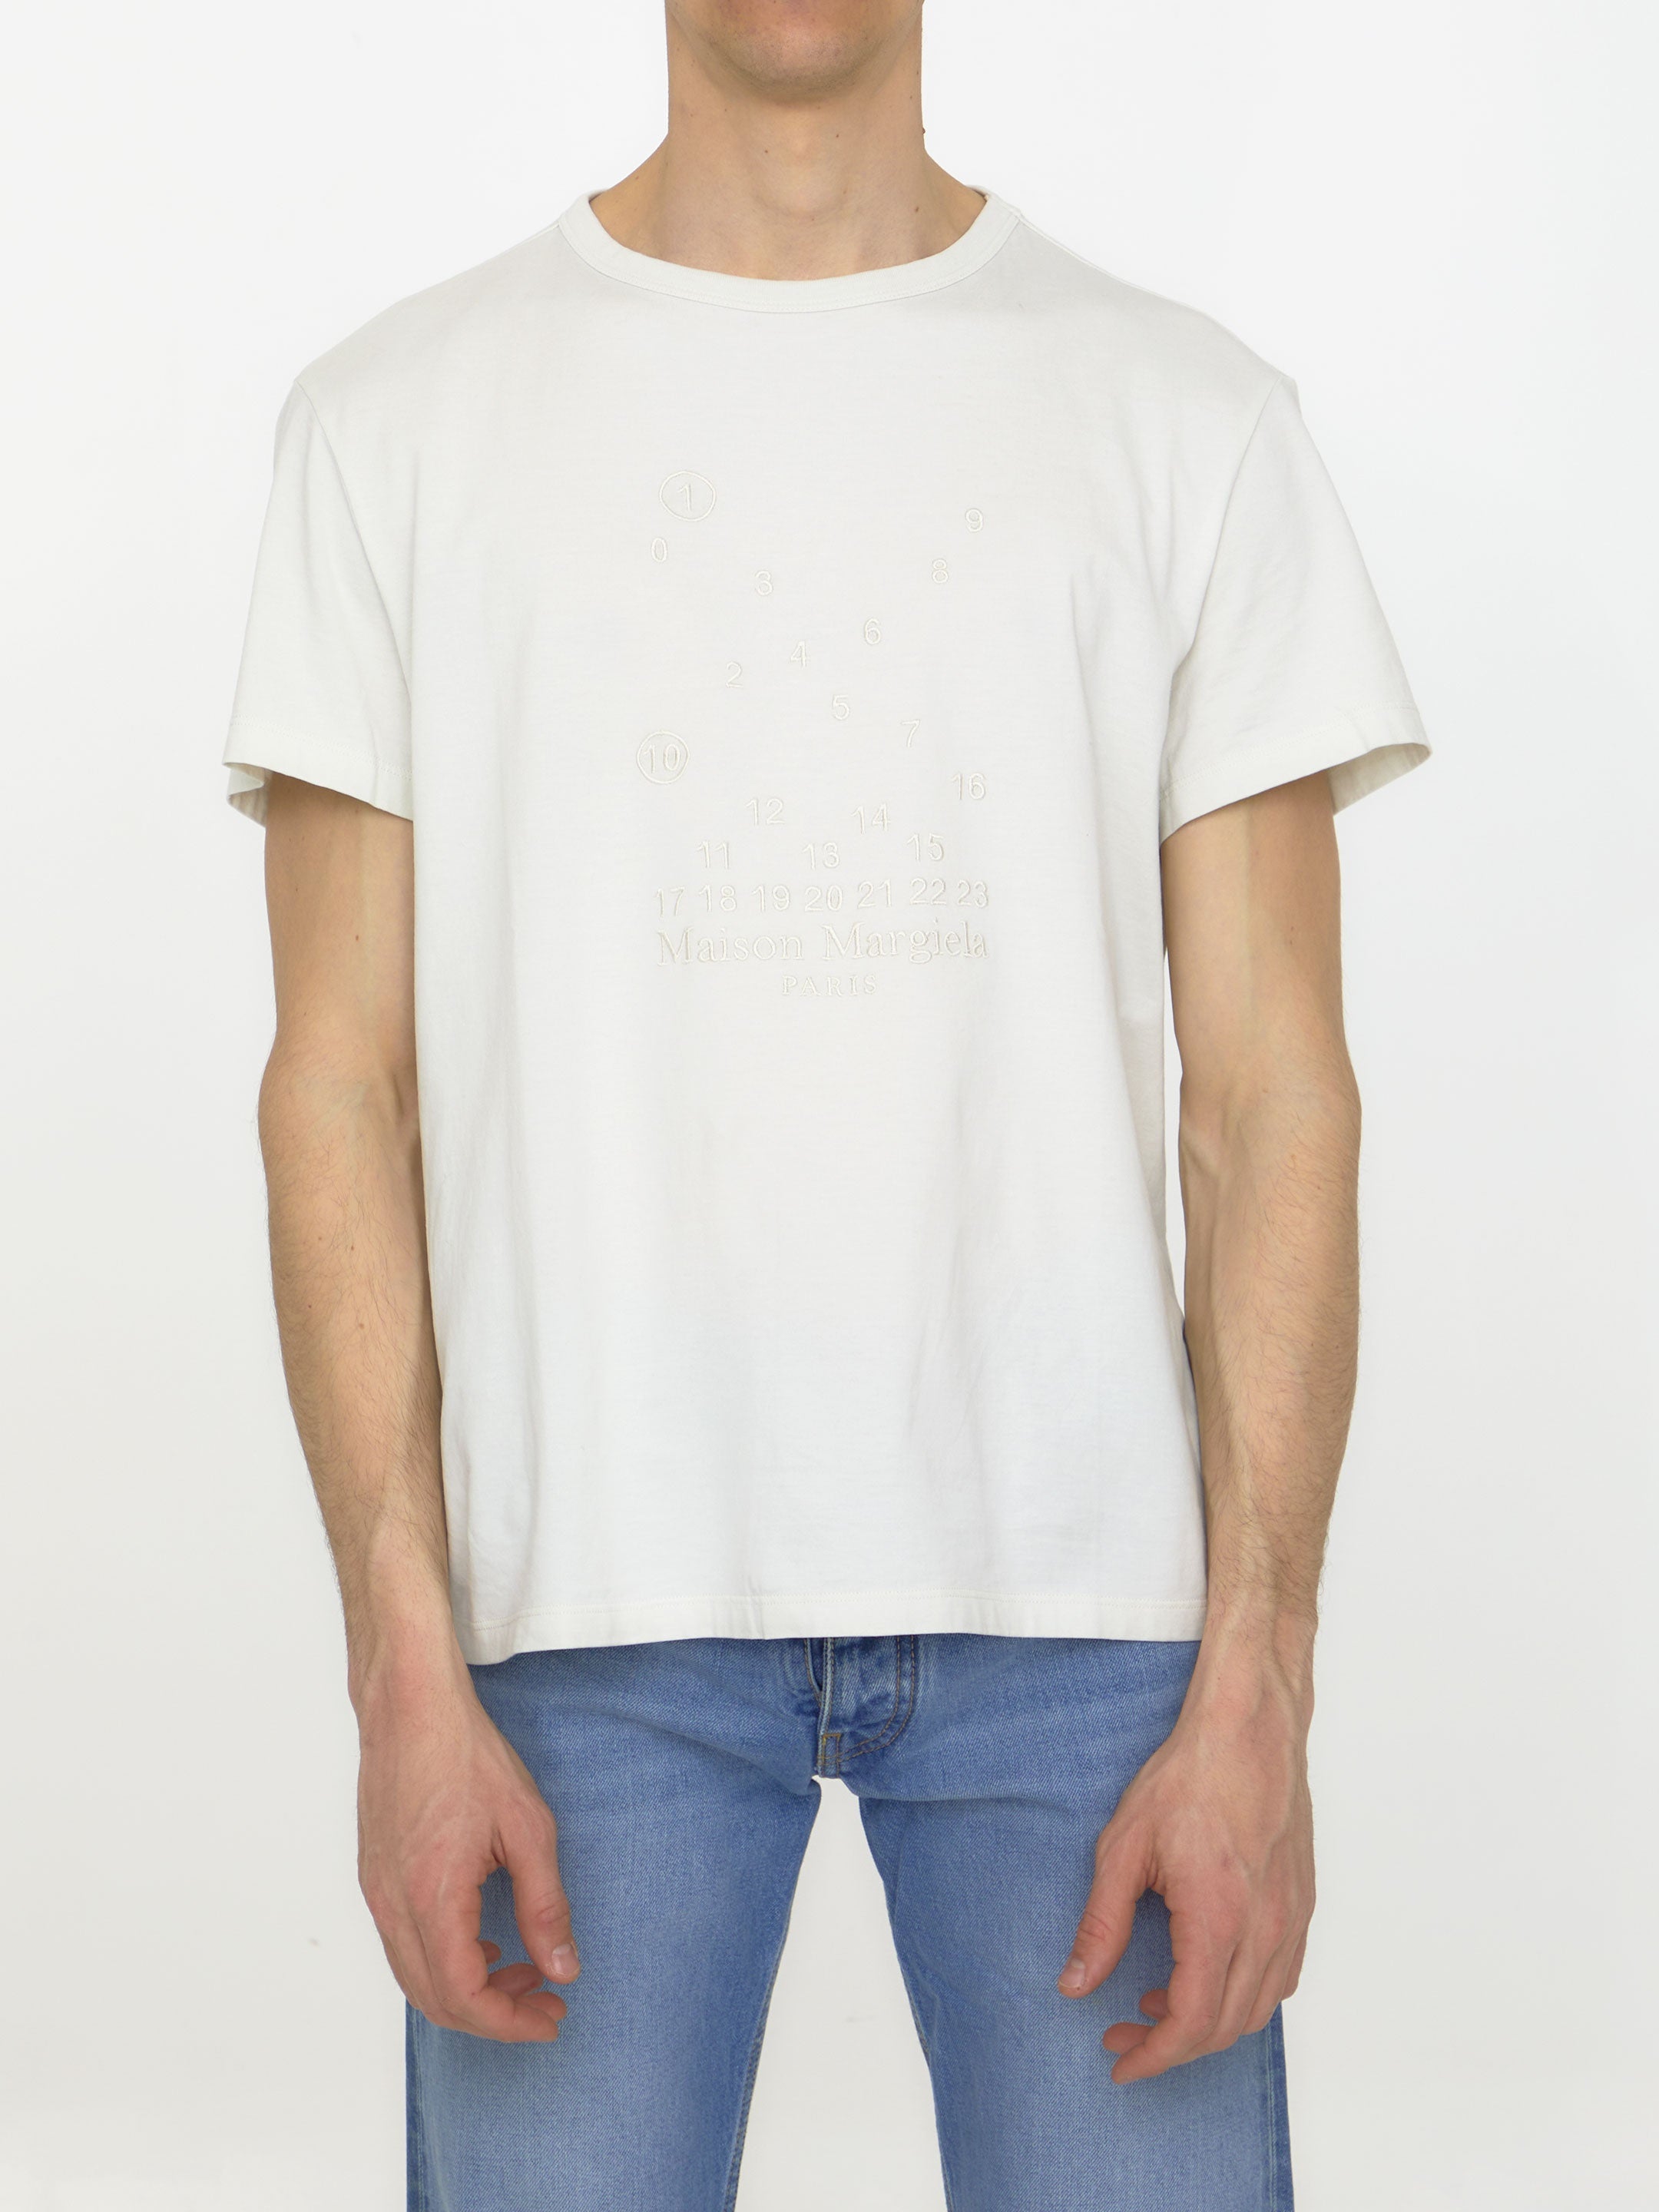 MAISON-MARGIELA-OUTLET-SALE-Numerical-logo-t-shirt-Shirts-L-WHITE-ARCHIVE-COLLECTION.jpg